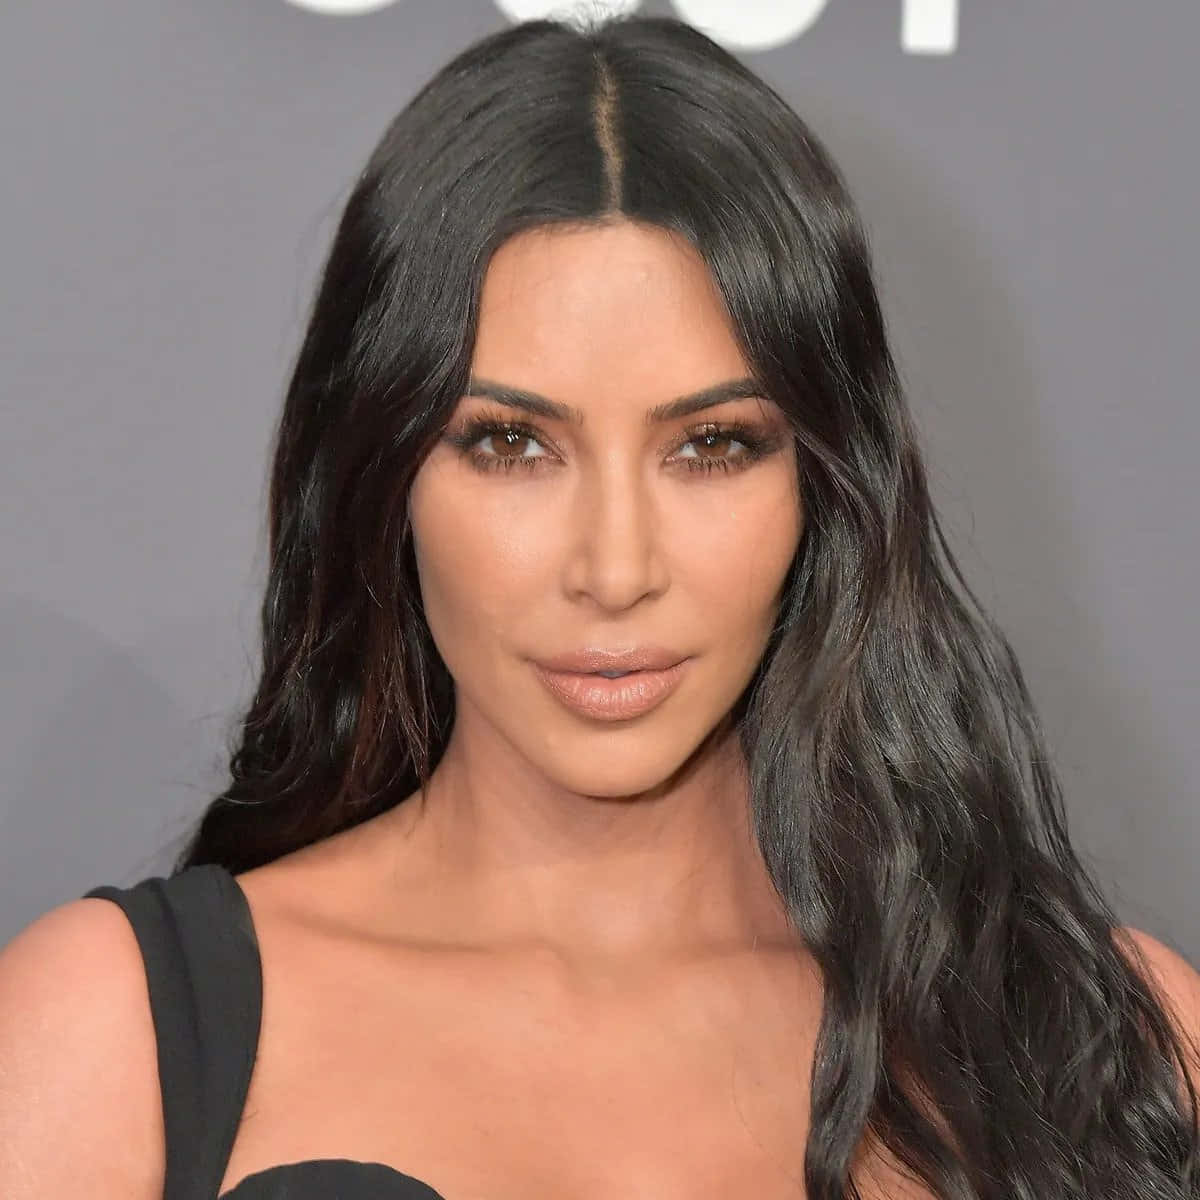 Kim Kardashian Flaunts Her Signature Curves in Chic Sheer Lingerie